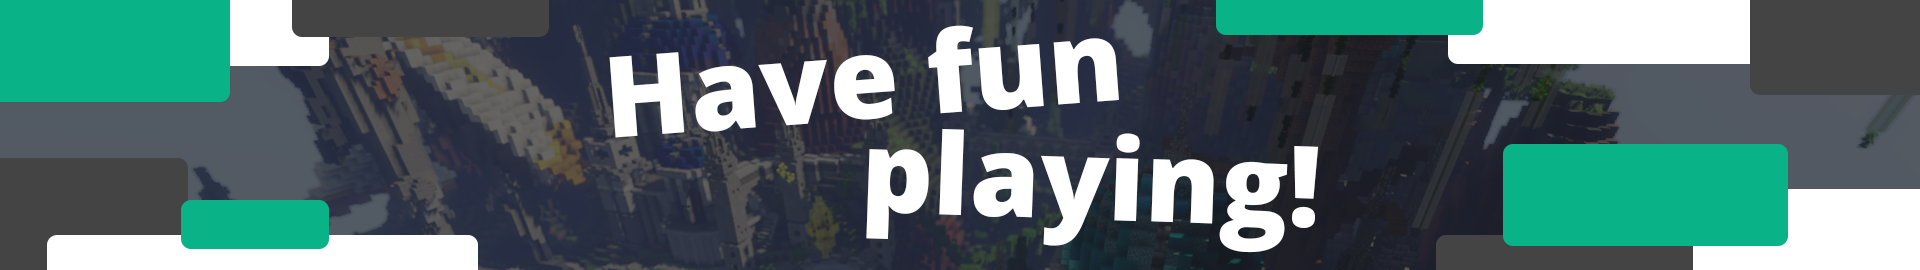 Have fun playing!